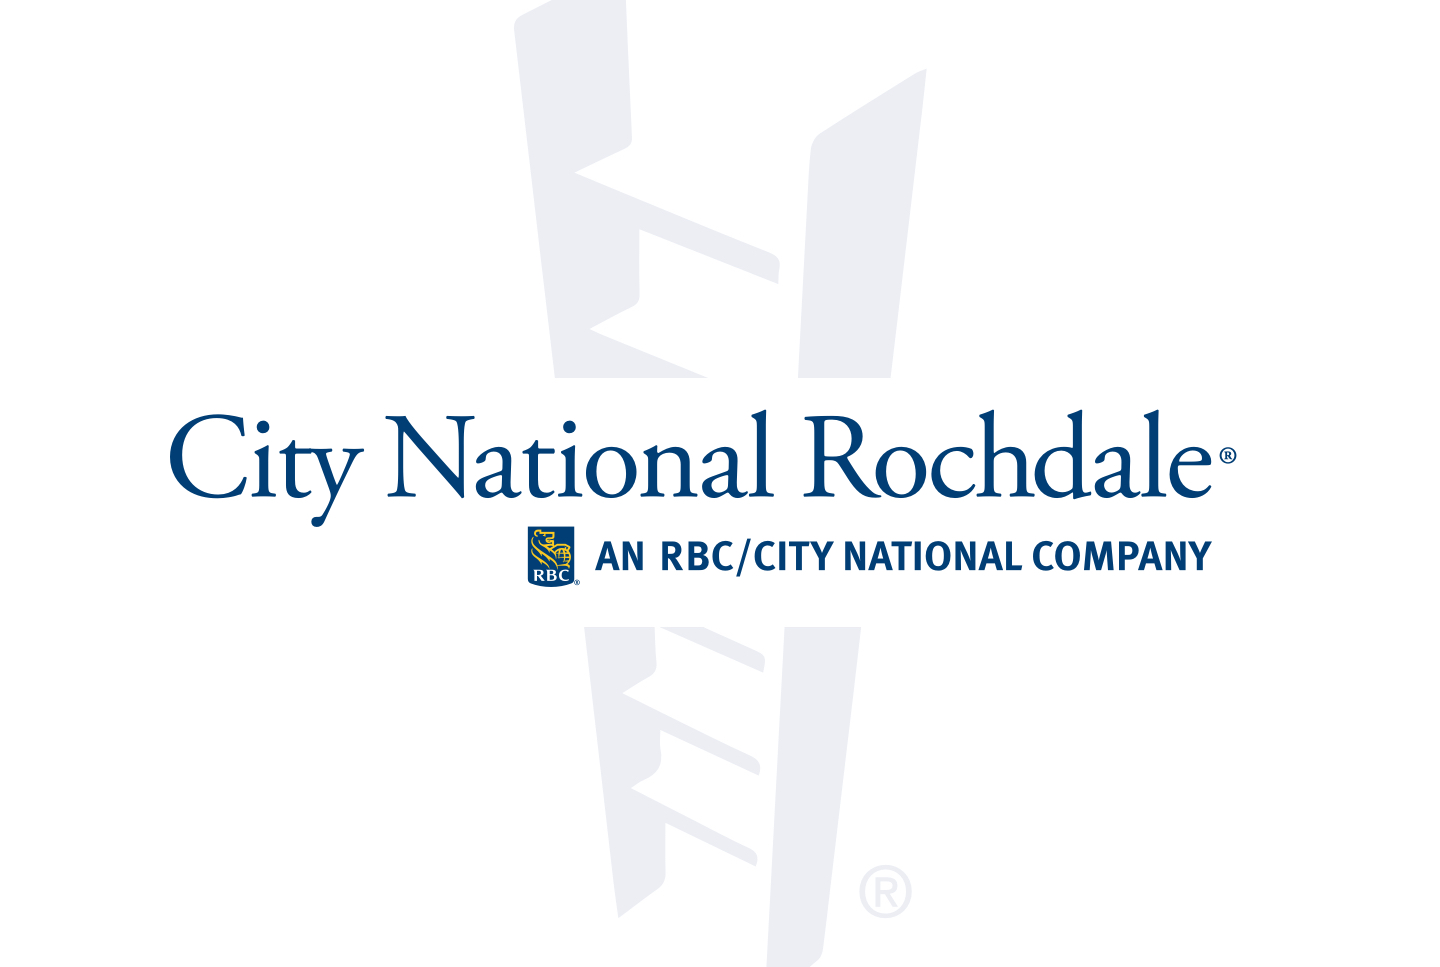 City National Rochdale